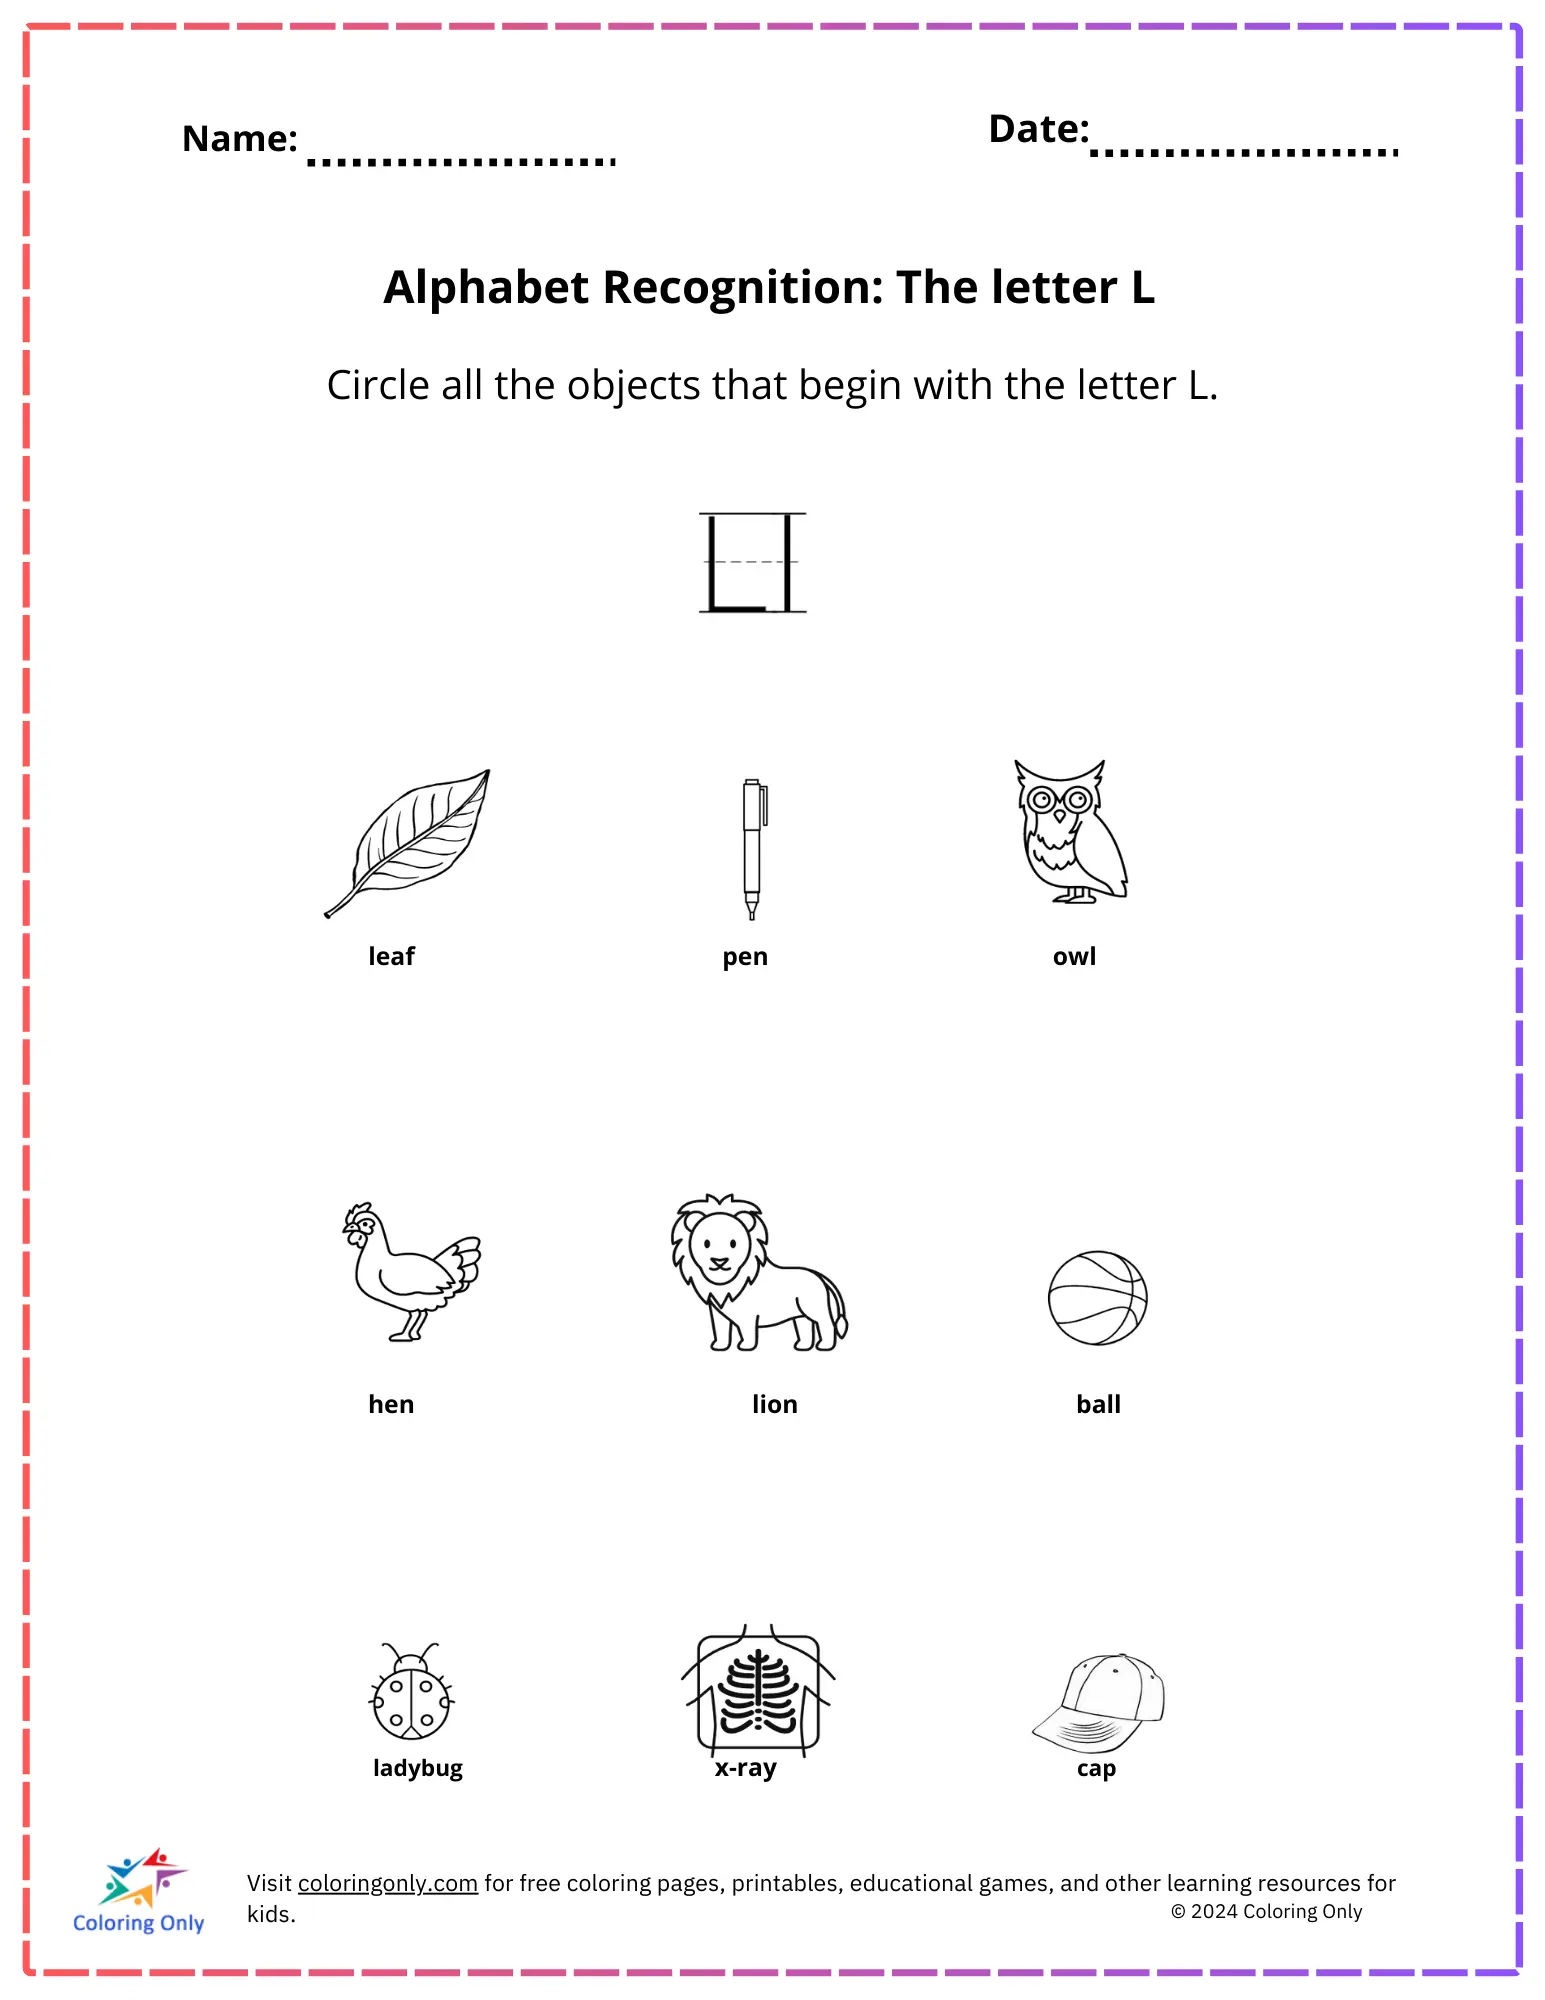 Alphabet Recognition: The Letter L Free Printable Worksheet